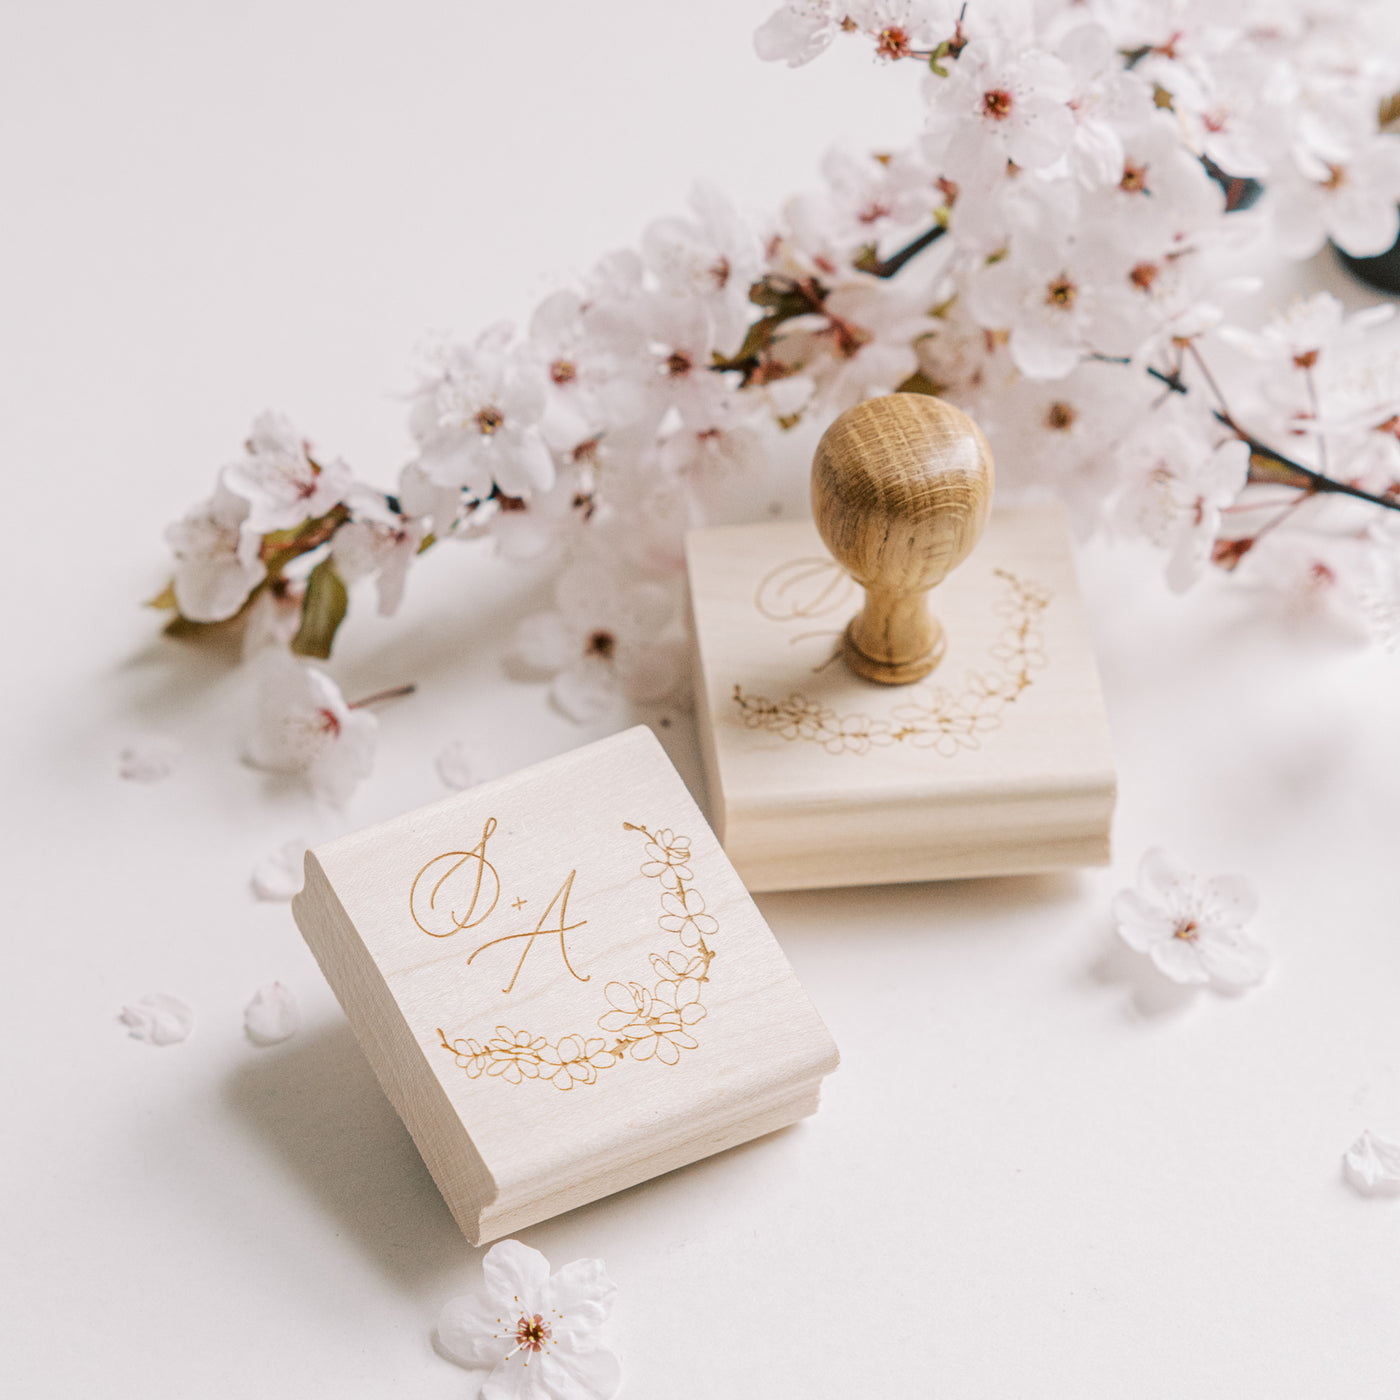 Emika Cherry Blossom Monogram Rubber Stamp for Fine Art Wedding Invitations | 'Sakura' Cherry Blossom Embellishments for Blush Pink Spring Wedding | Heirloom Seals